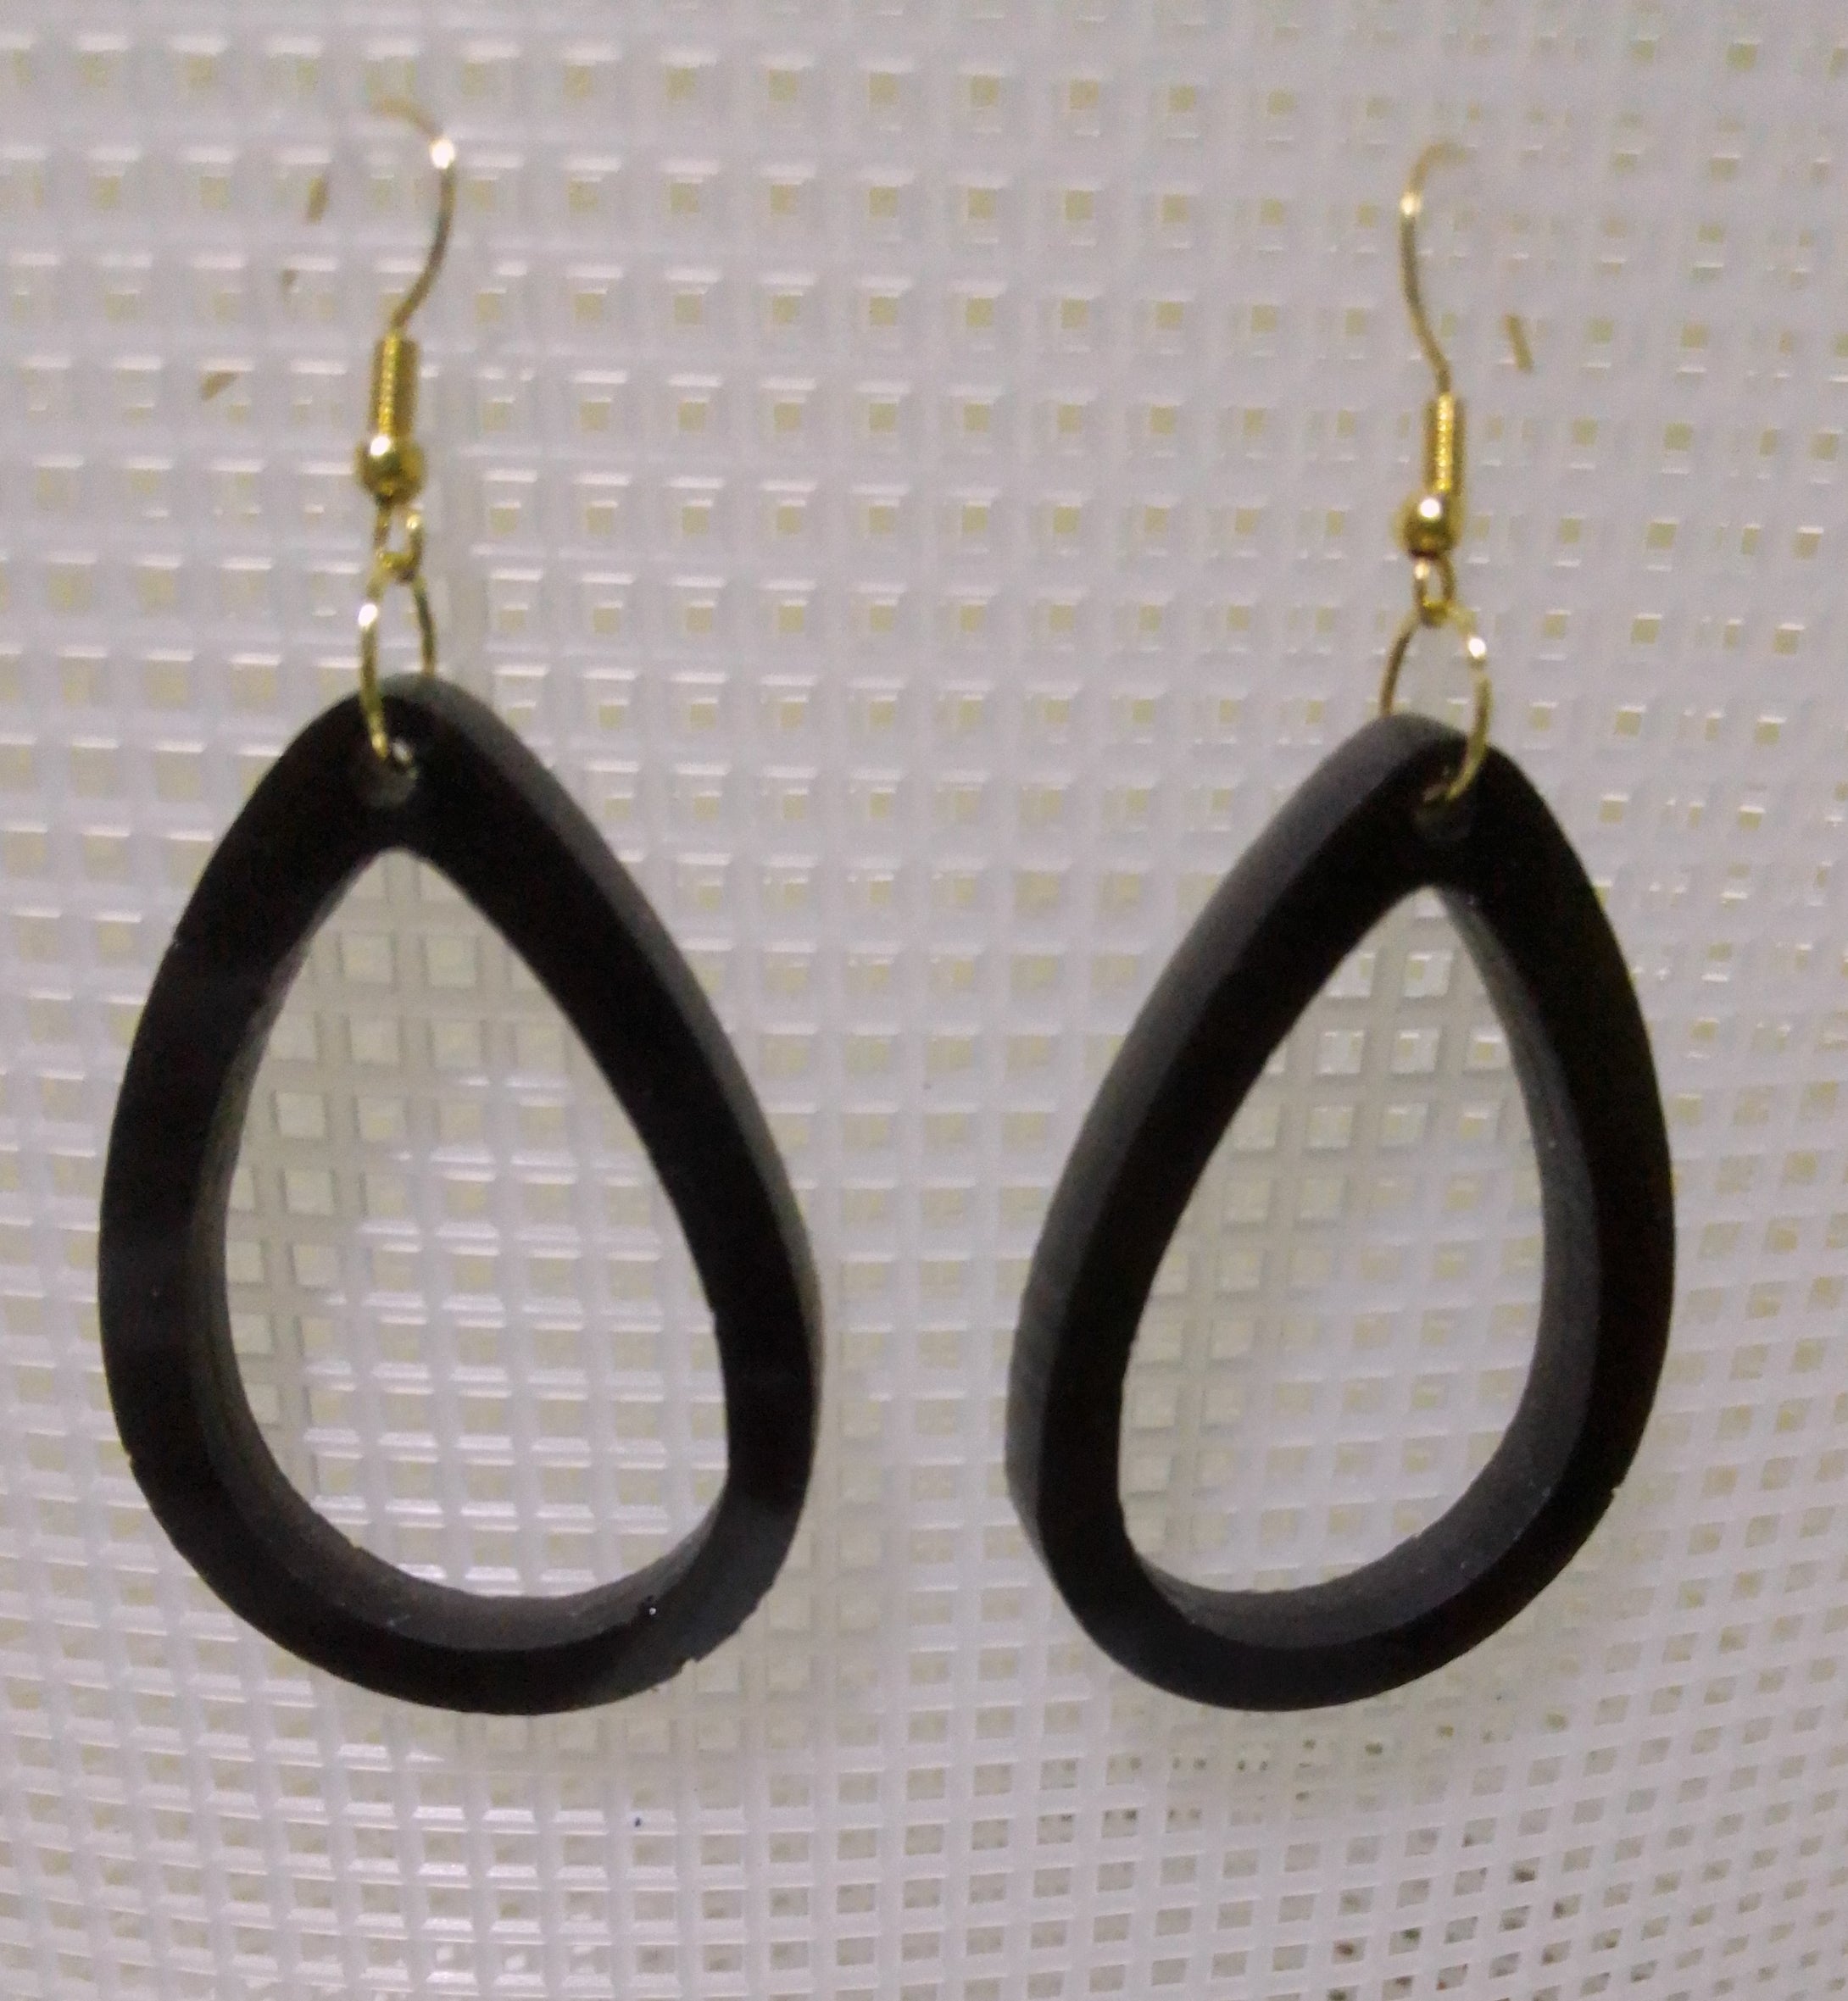 volcanic ash and epoxy resin earrings shaped like a teardrop loop